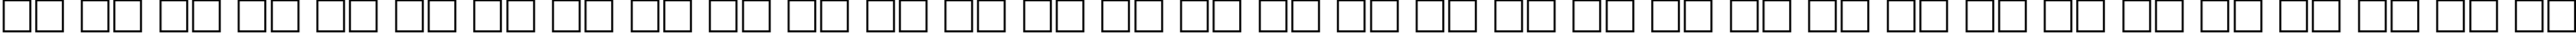 Пример написания русского алфавита шрифтом LugaShadow